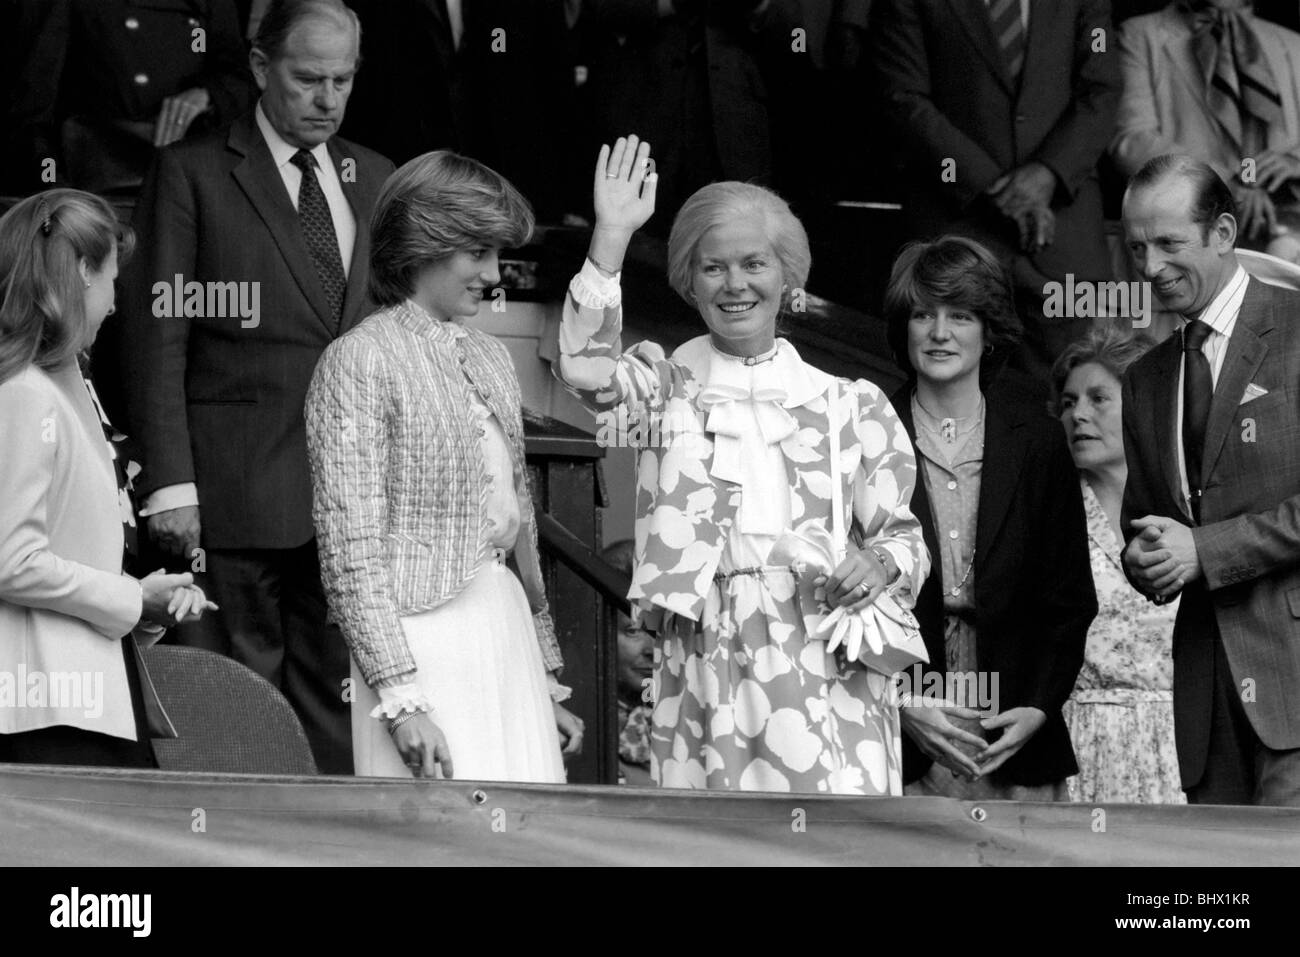 Tournoi de tennis de Wimbledon. 1981 Womens finales. Chris Evert Lloyd c. Hana Mandlikova. L'observation de la princesse Diana. Juillet 1981 81-3782-019 Banque D'Images